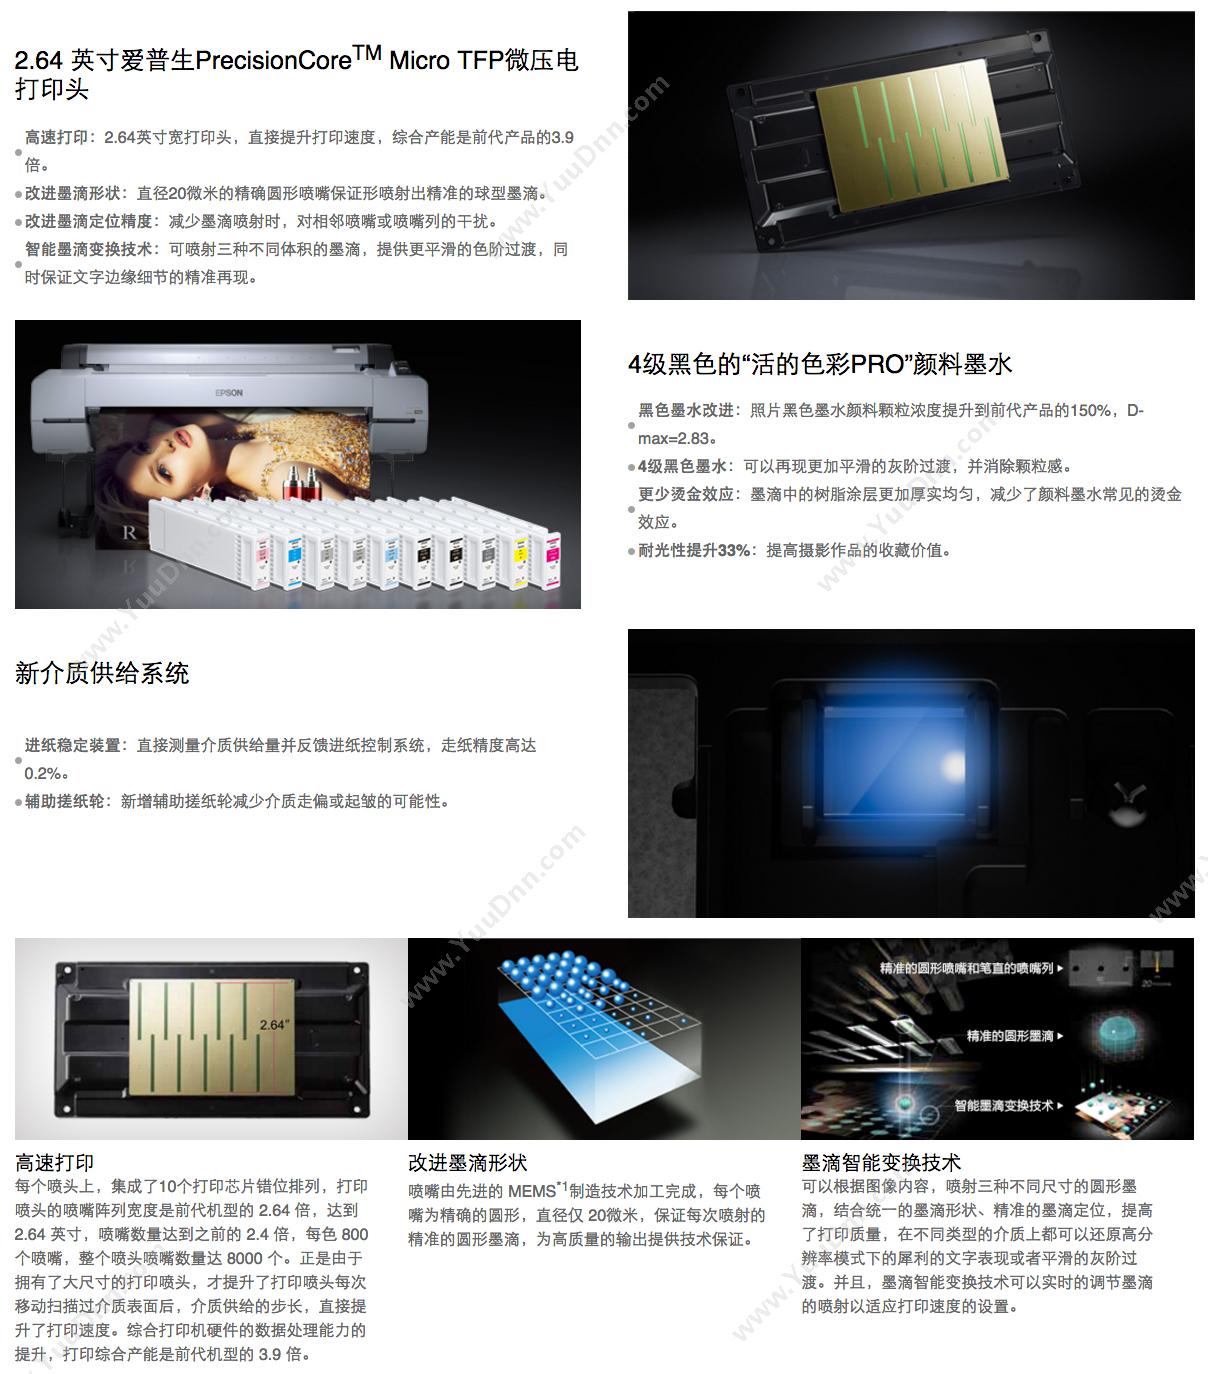 爱普生 Epson SureColorP20080  宽幅打印机/绘图仪